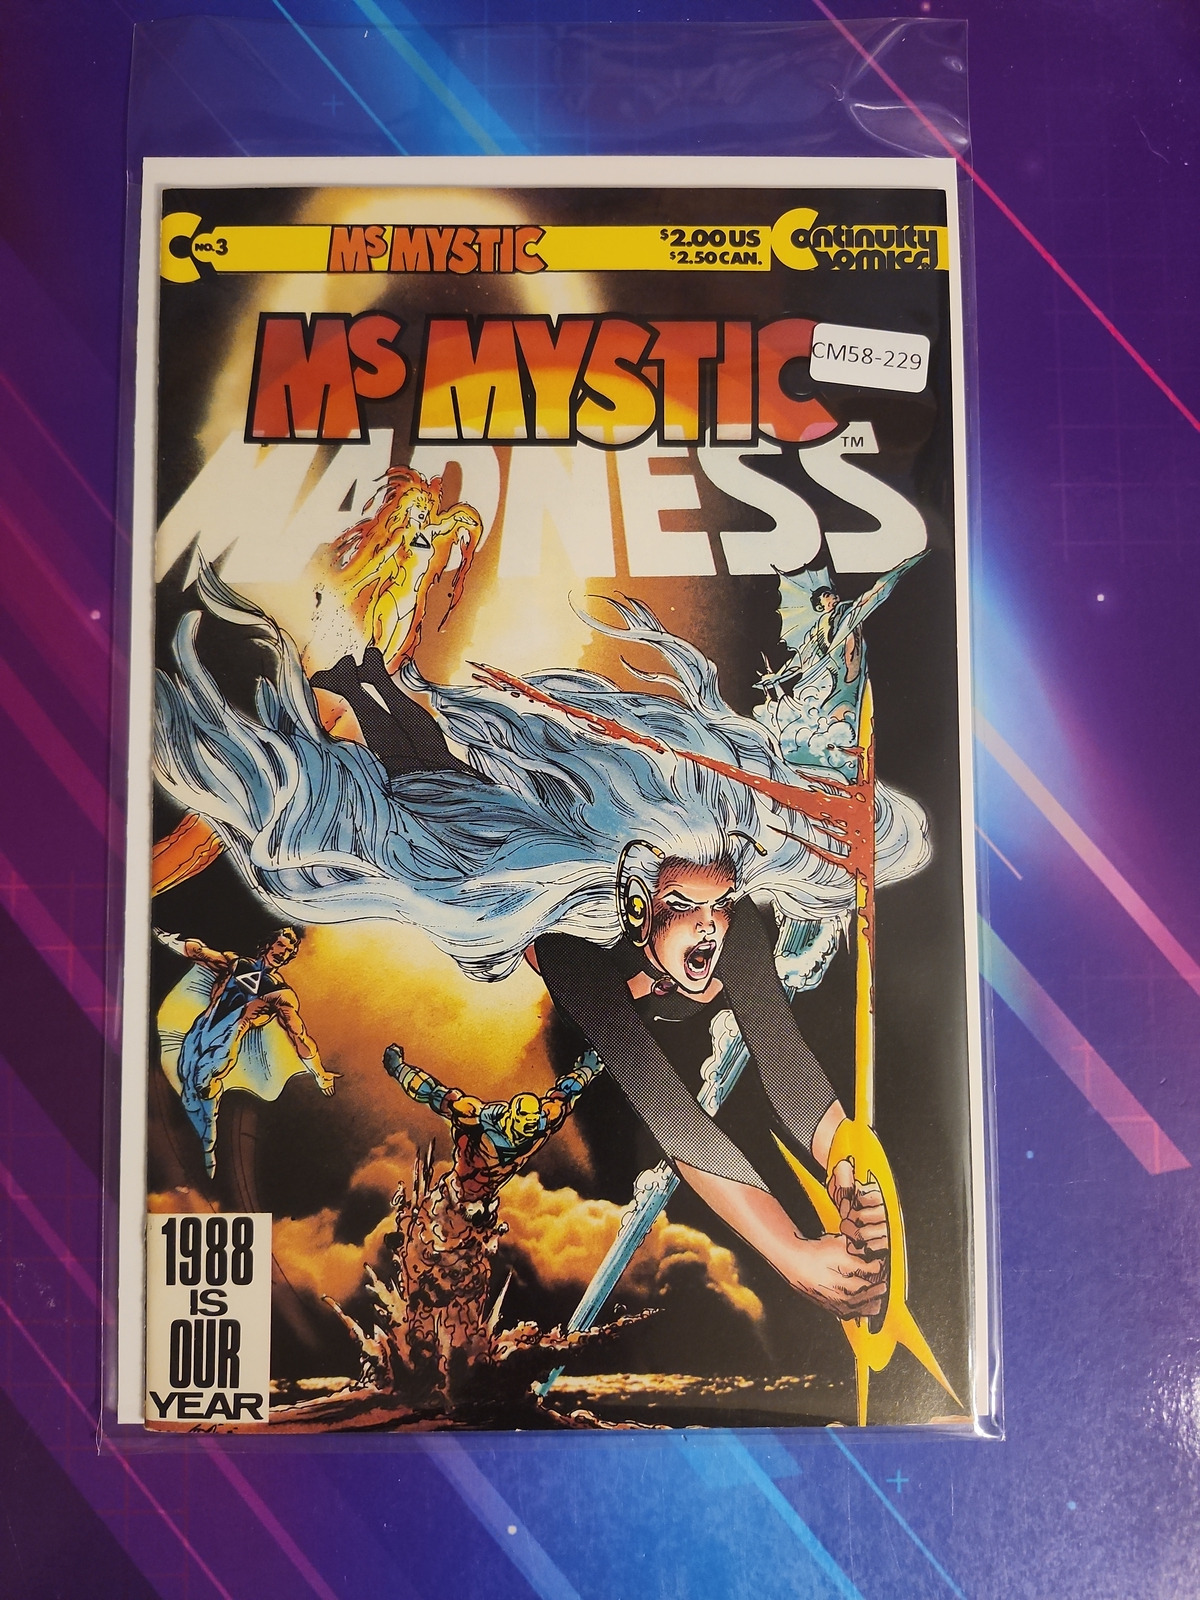 MS. MYSTIC #3 VOL. 2 HIGH GRADE CONTINUITY COMIC BOOK CM58-229